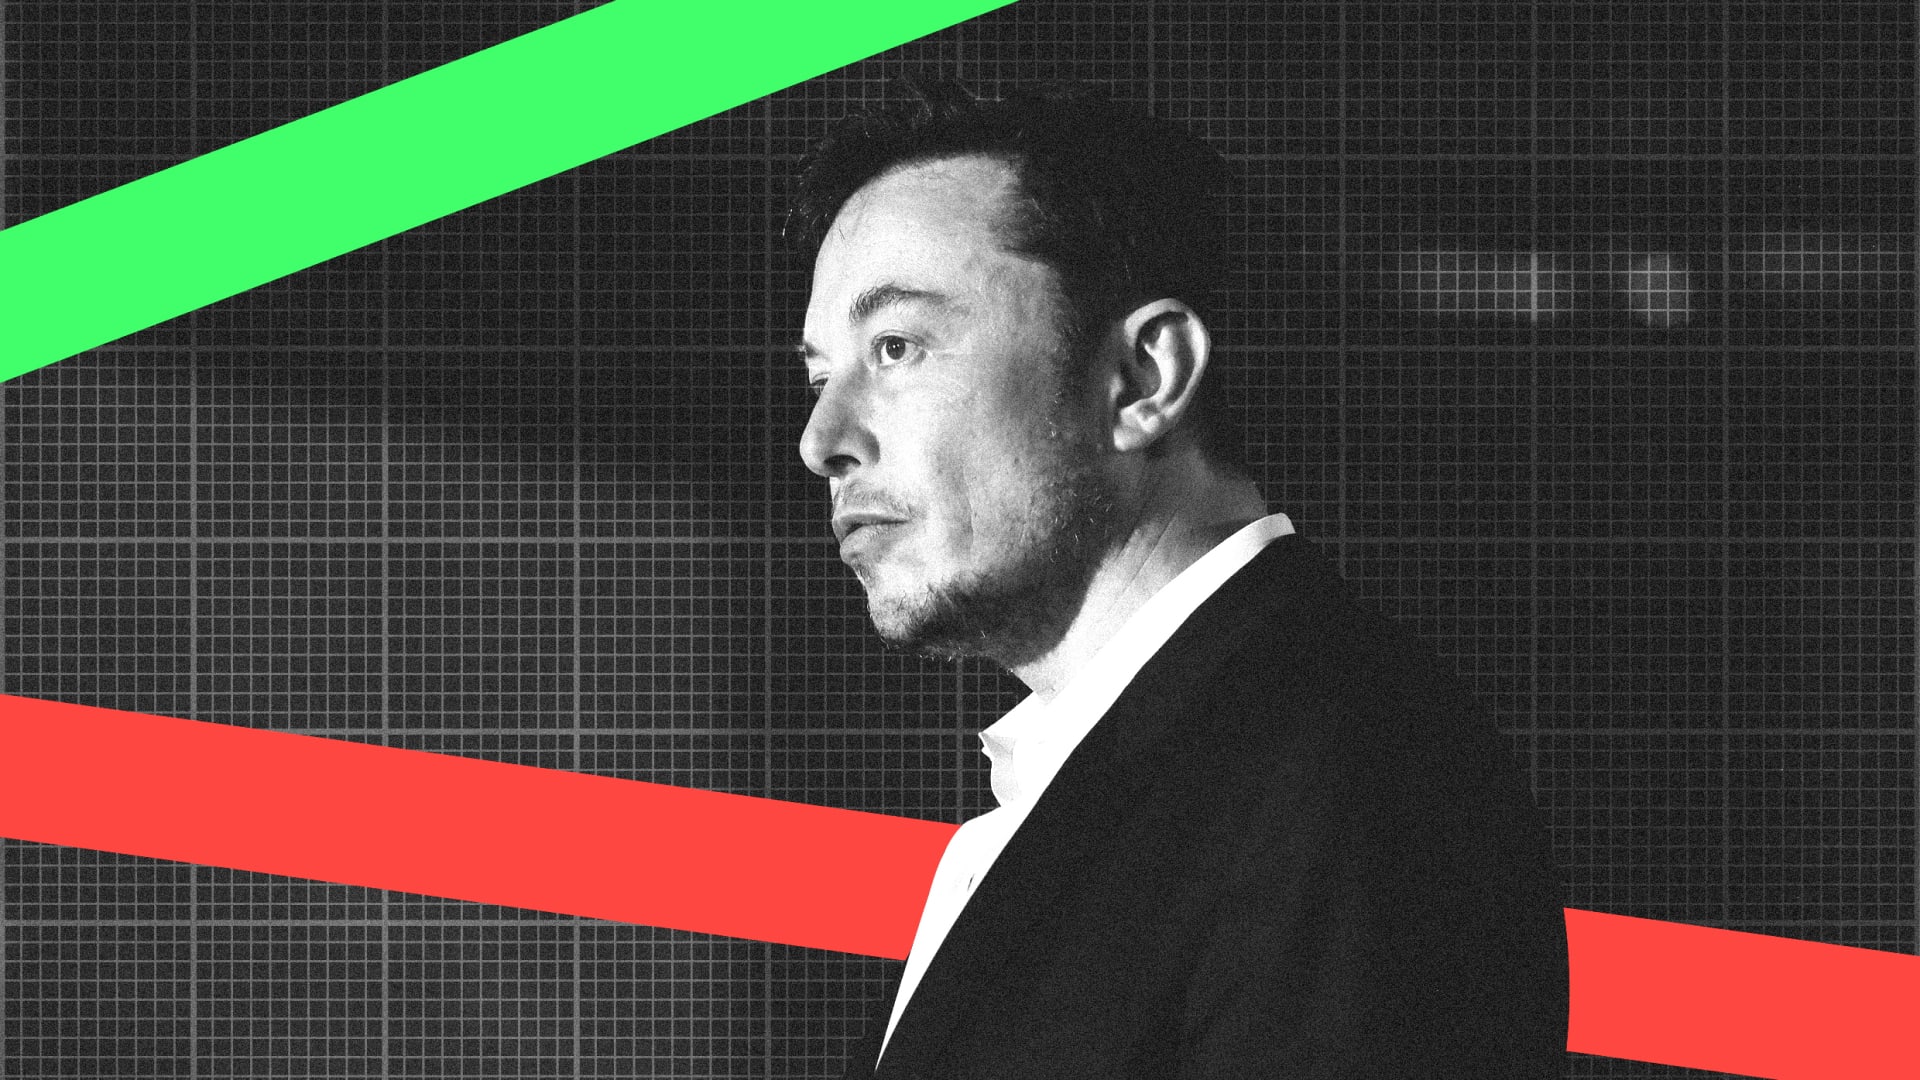 Elon Musk makes 40,668 times more than a median Tesla employee